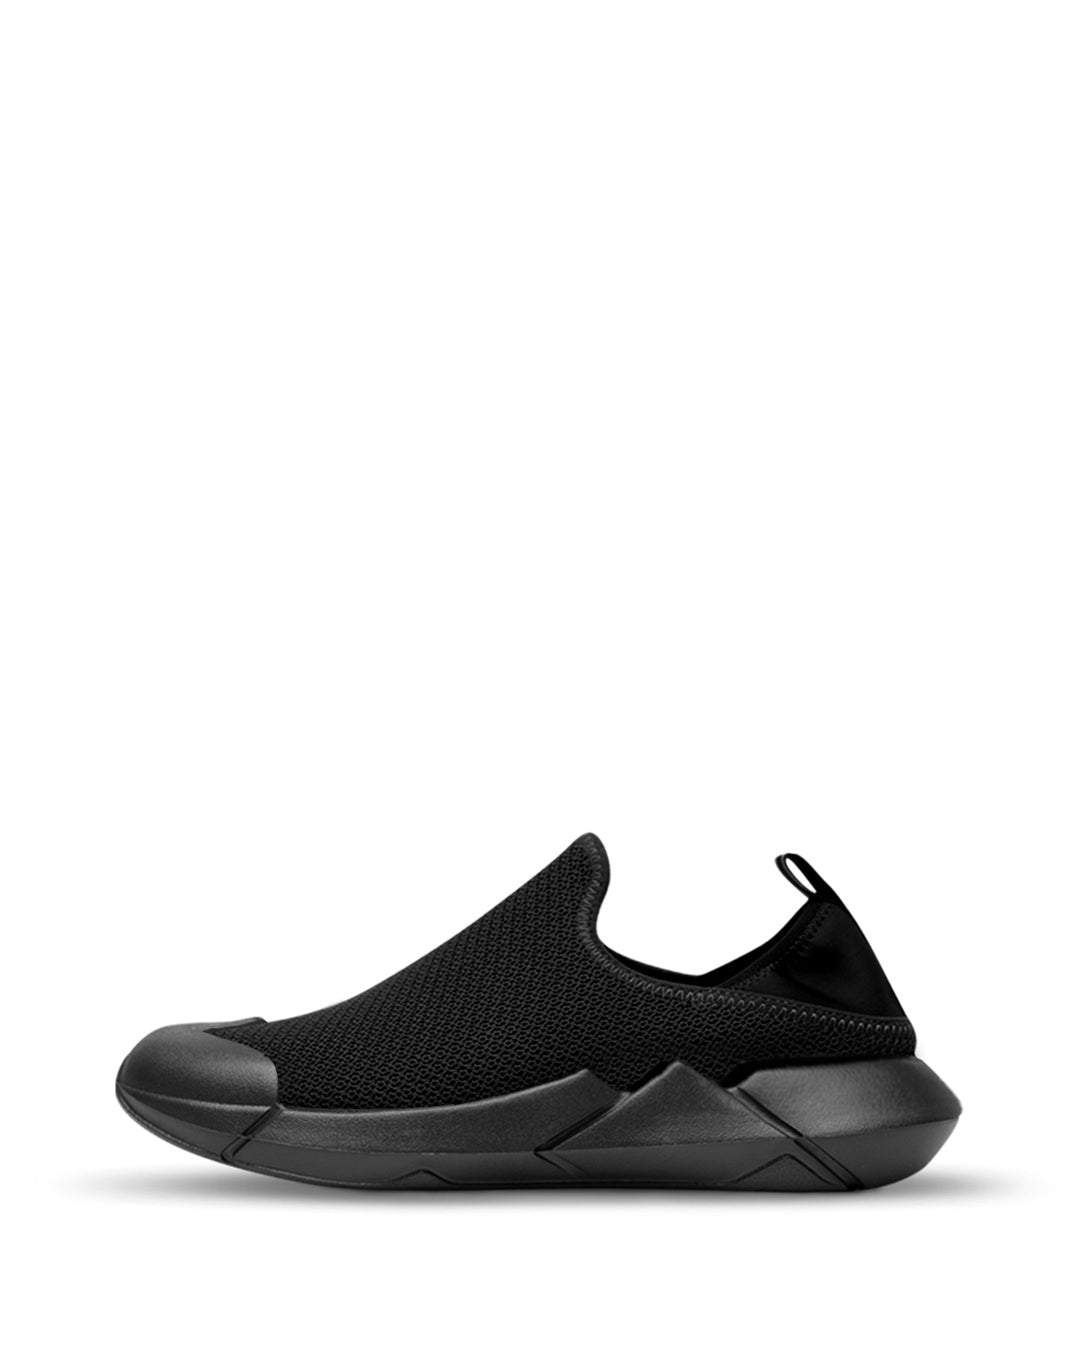 MUVEZ Footwear : Indoor Slippers Re-Imagined